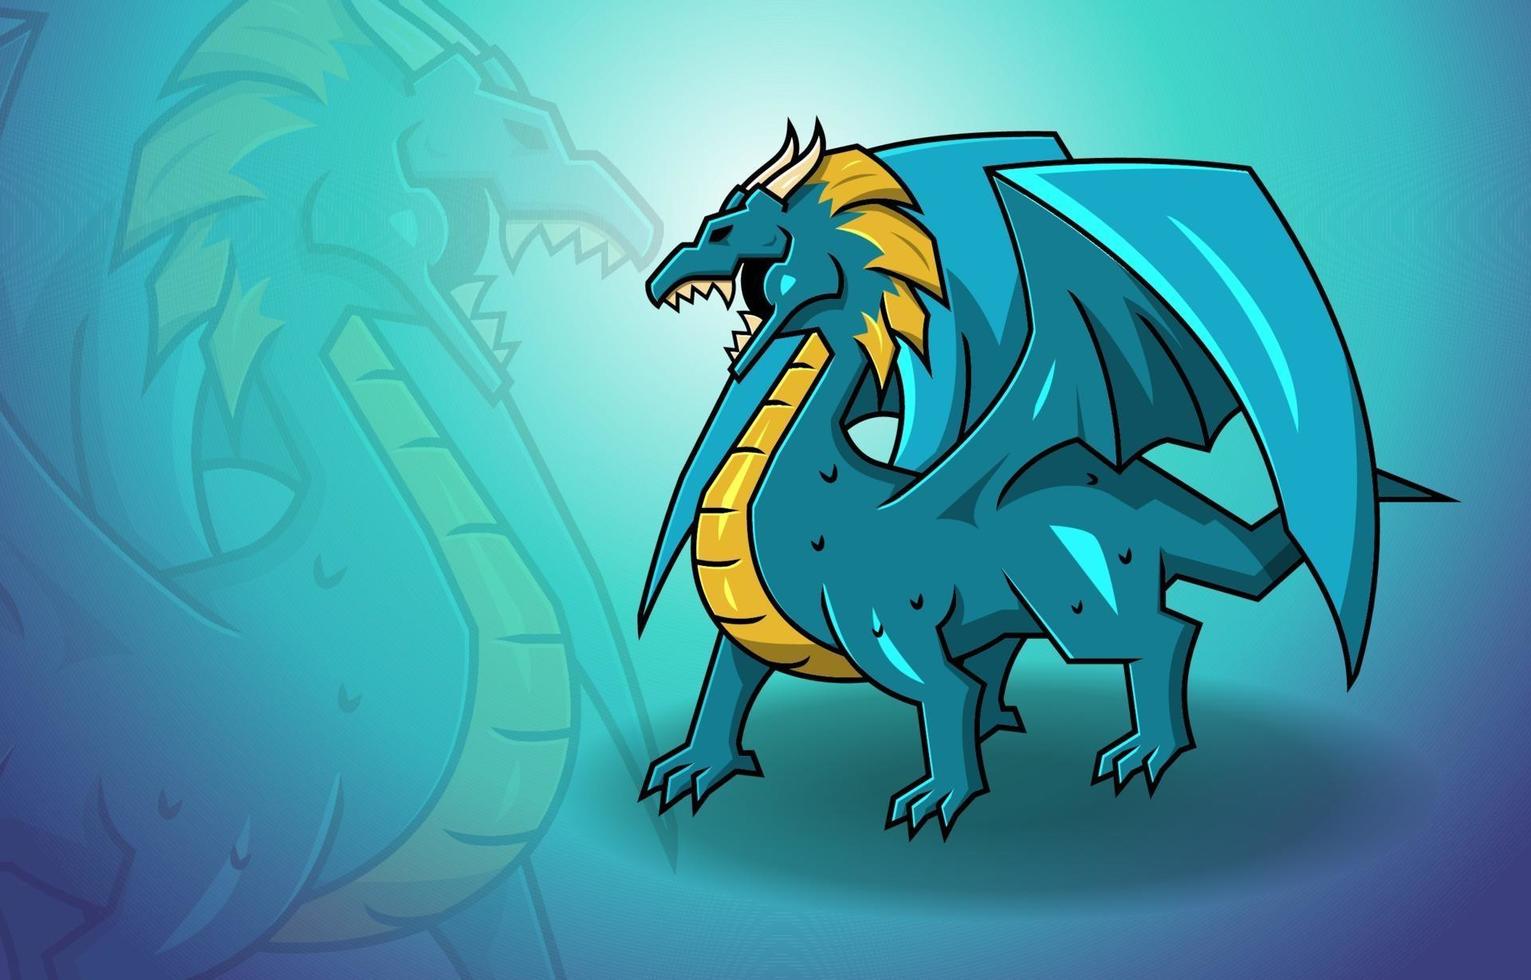 Blue Dragon Wings Fantasy Mythology Monster Legend Creature vector